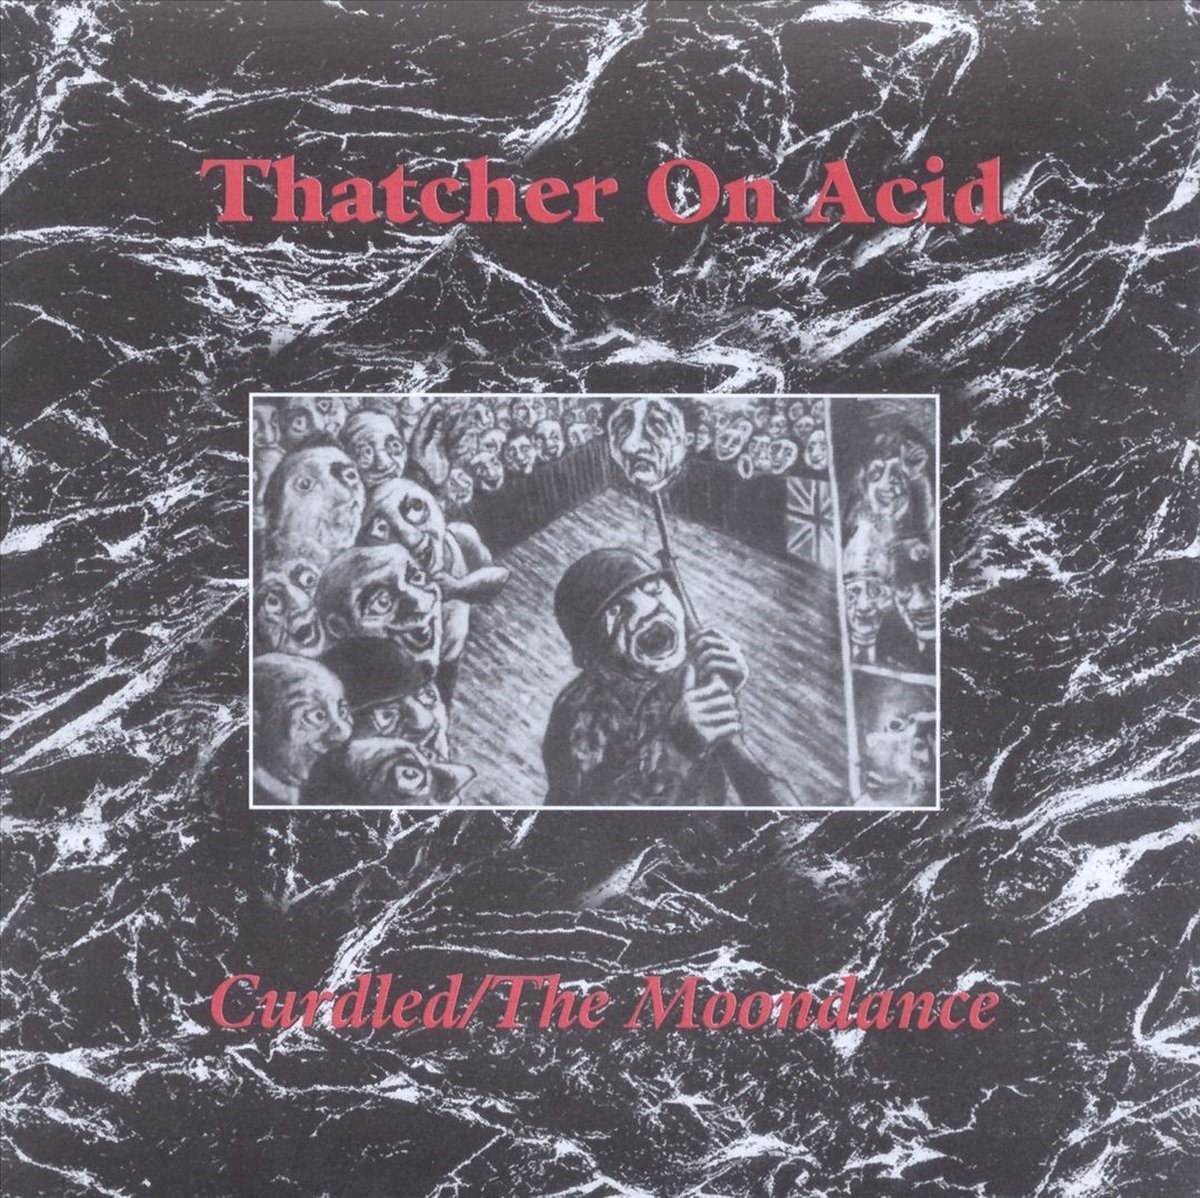 Thatcher On Acid - Curdled/Moondance (CD) - Thatcher on Acid